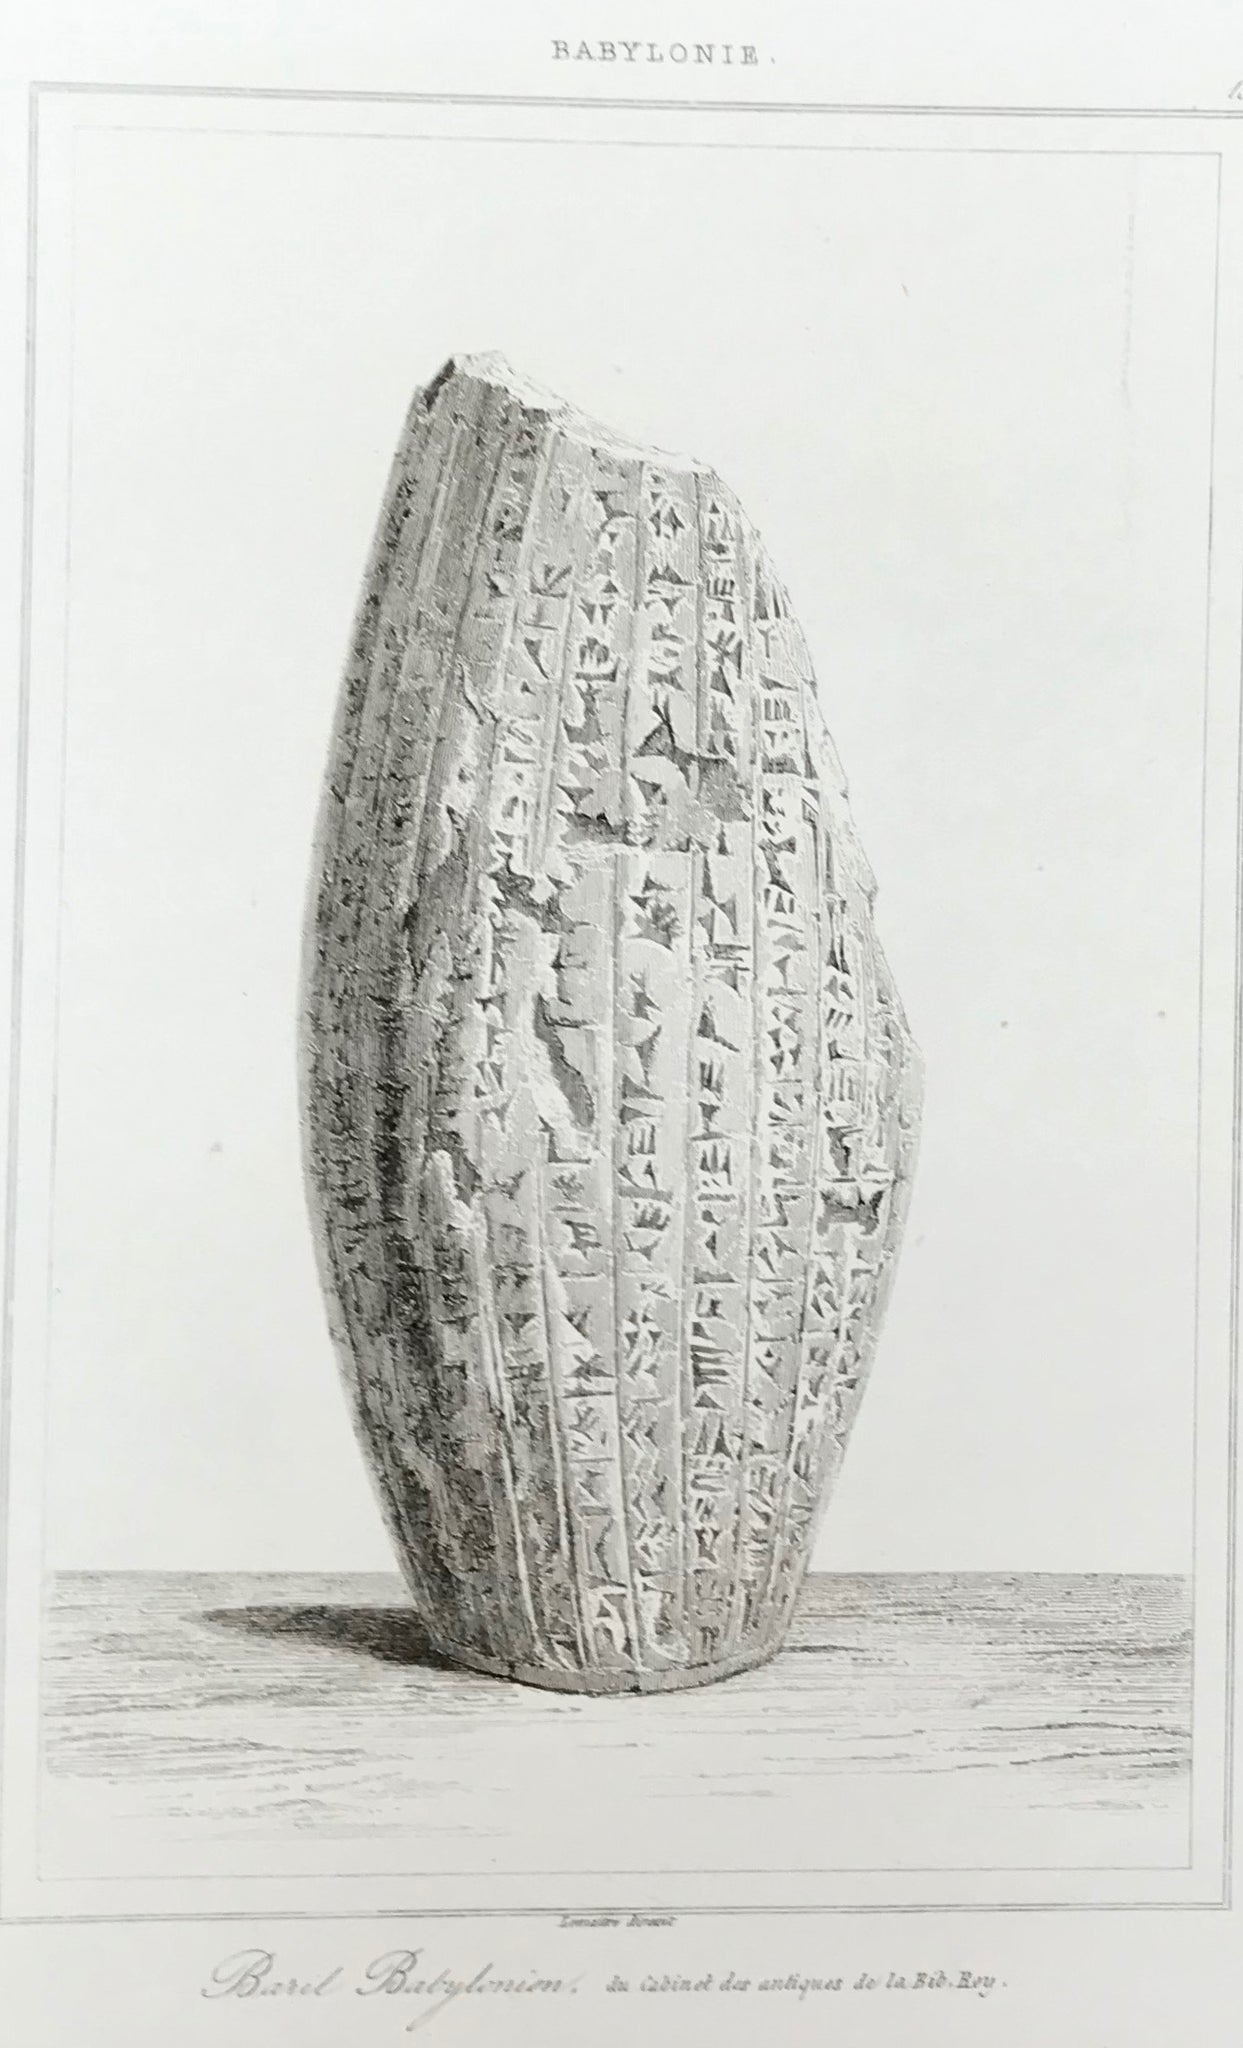 Babylonie Baril Babylonien, du Caninet des antiques de la Bib. Roy.  Steel engraving from Lemaitre ca 1845.